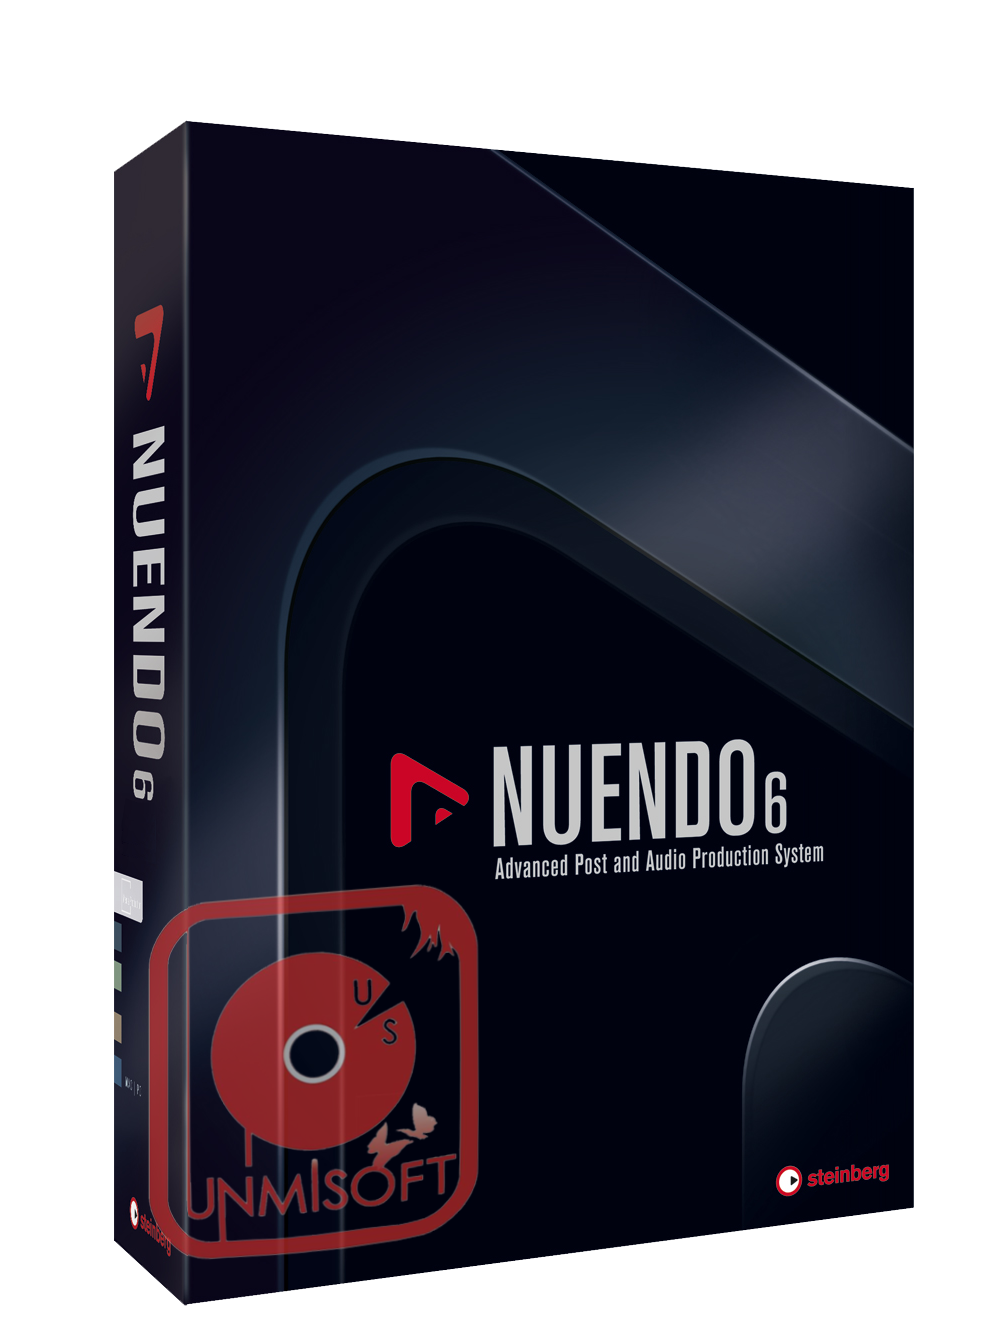 Nuendo 4 Free Download Full Version For Mac